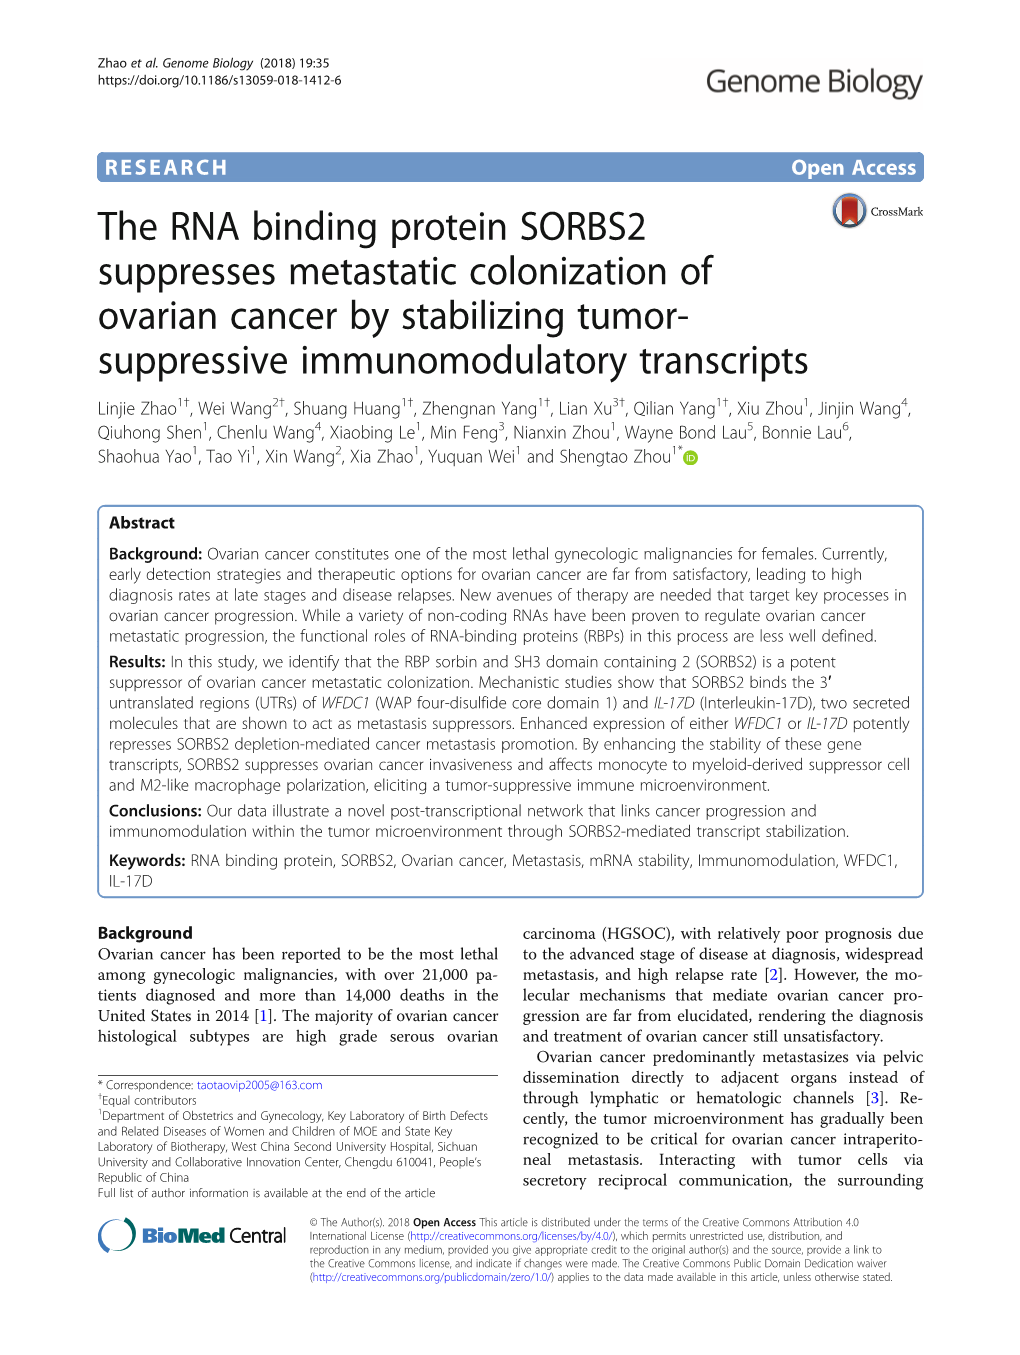 The RNA Binding Protein SORBS2 Suppresses Metastatic